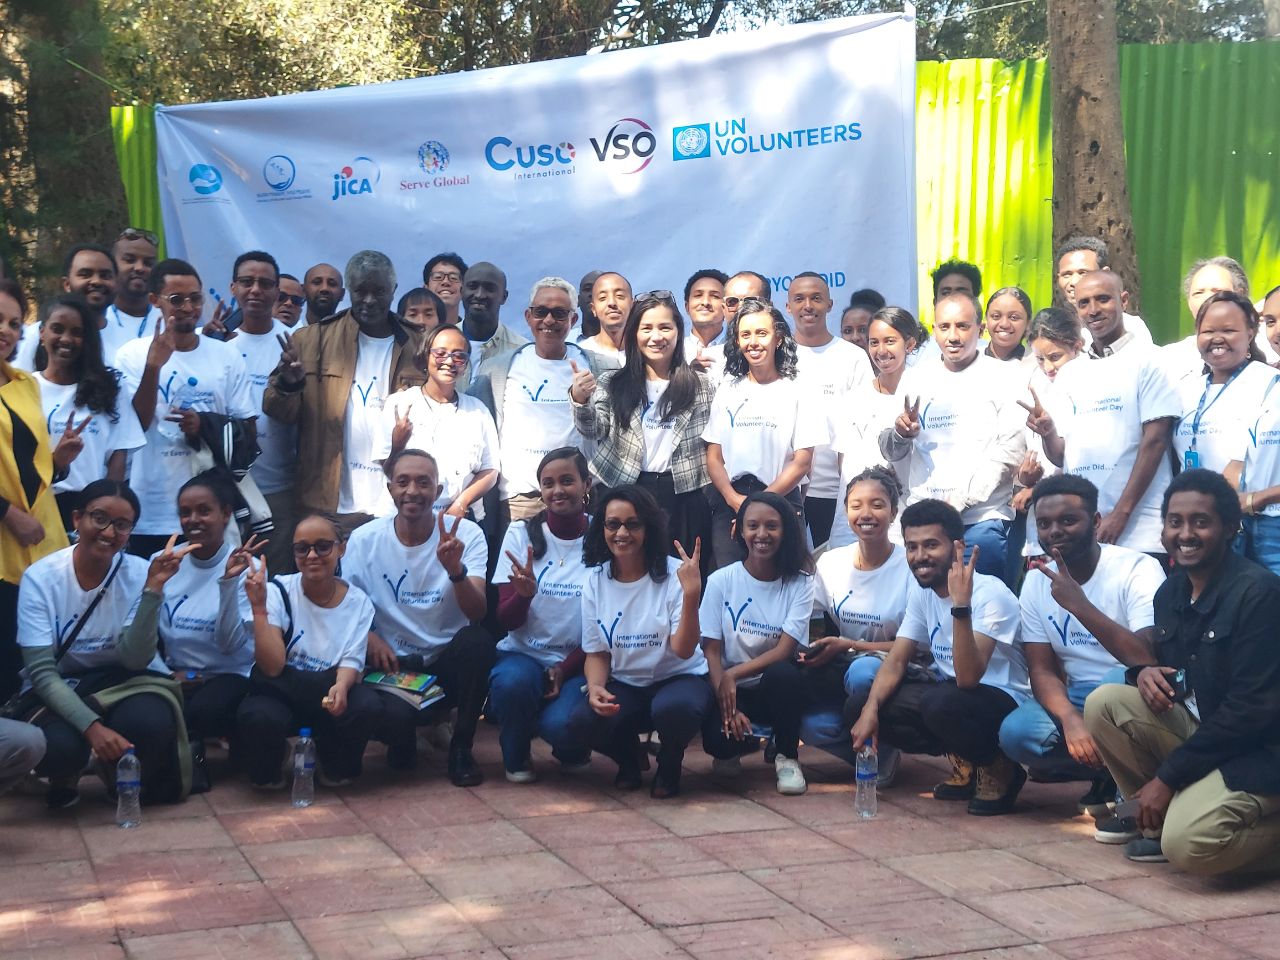 International Volunteer Day has been celebrated at Tesfa addis parents children cancer organization 